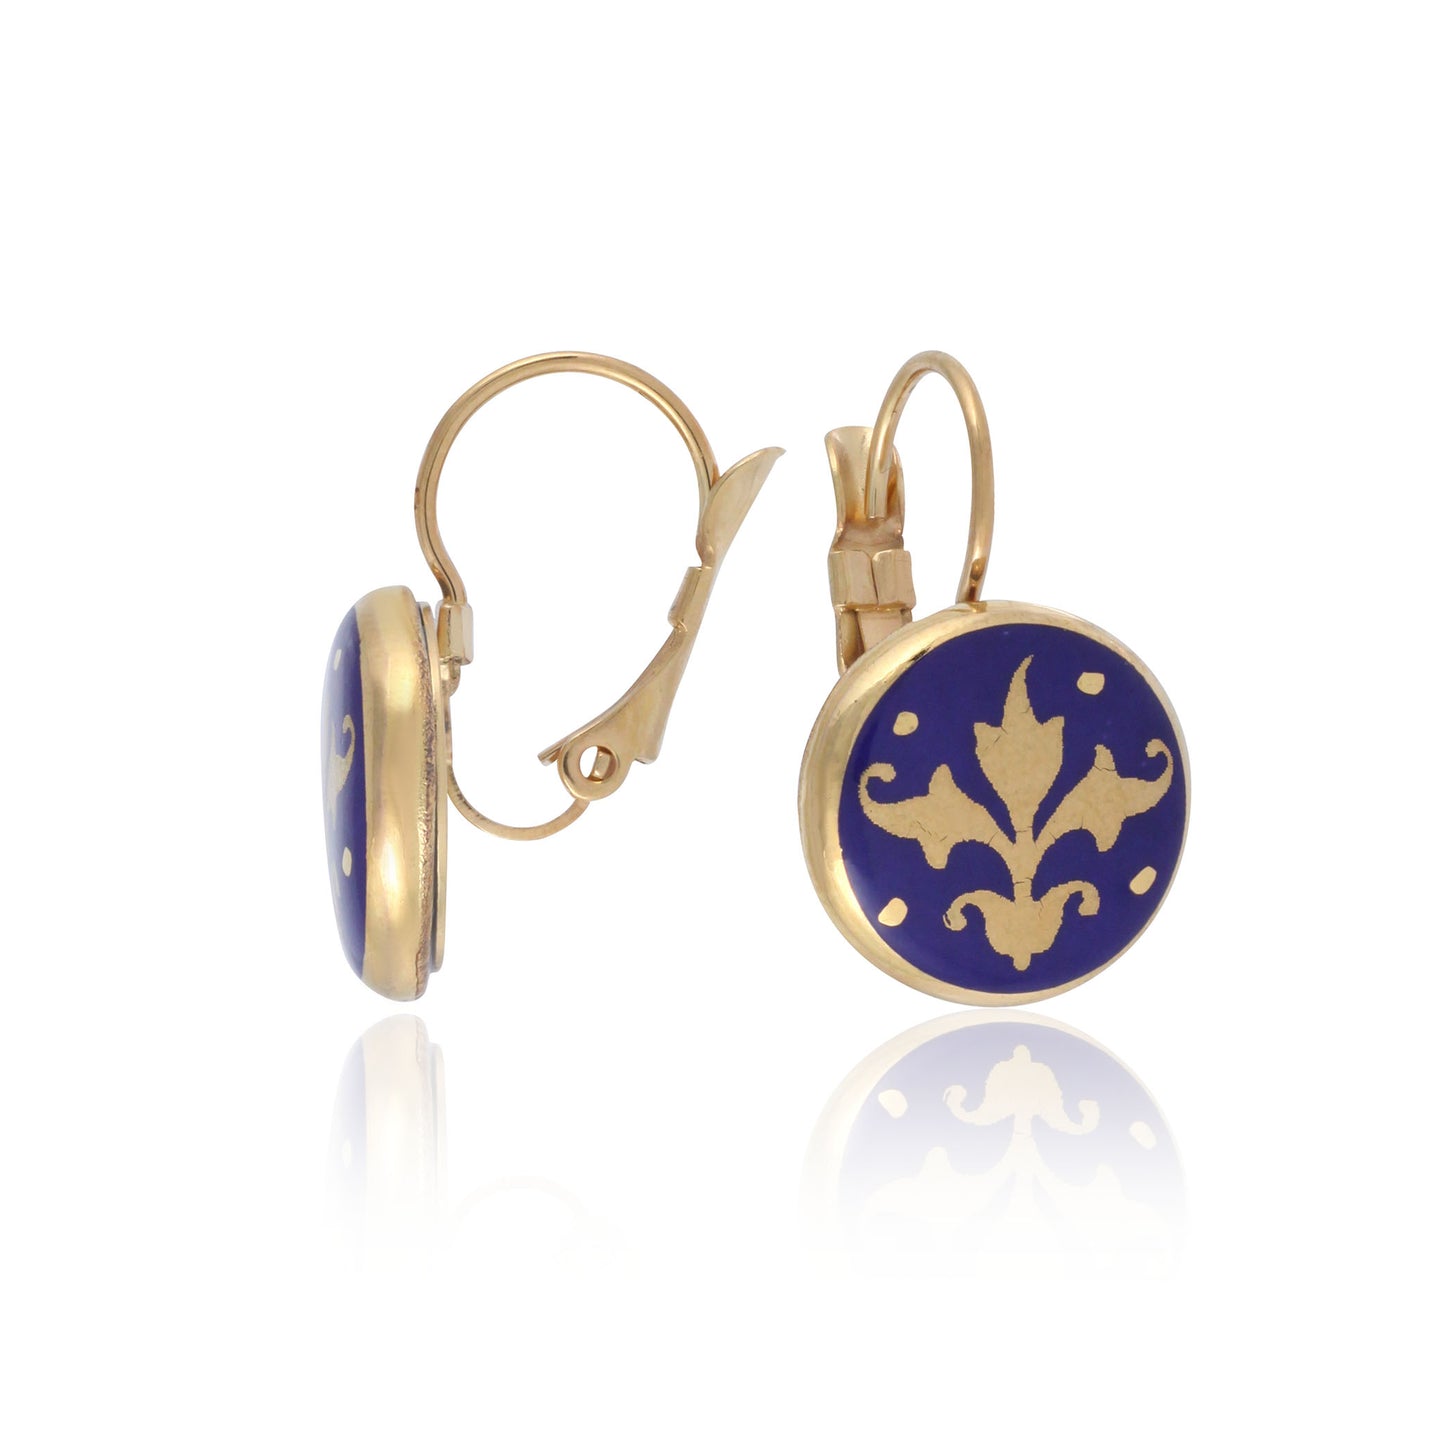 BAROQUE royal blue gold plated fine porcelain clasp earring set